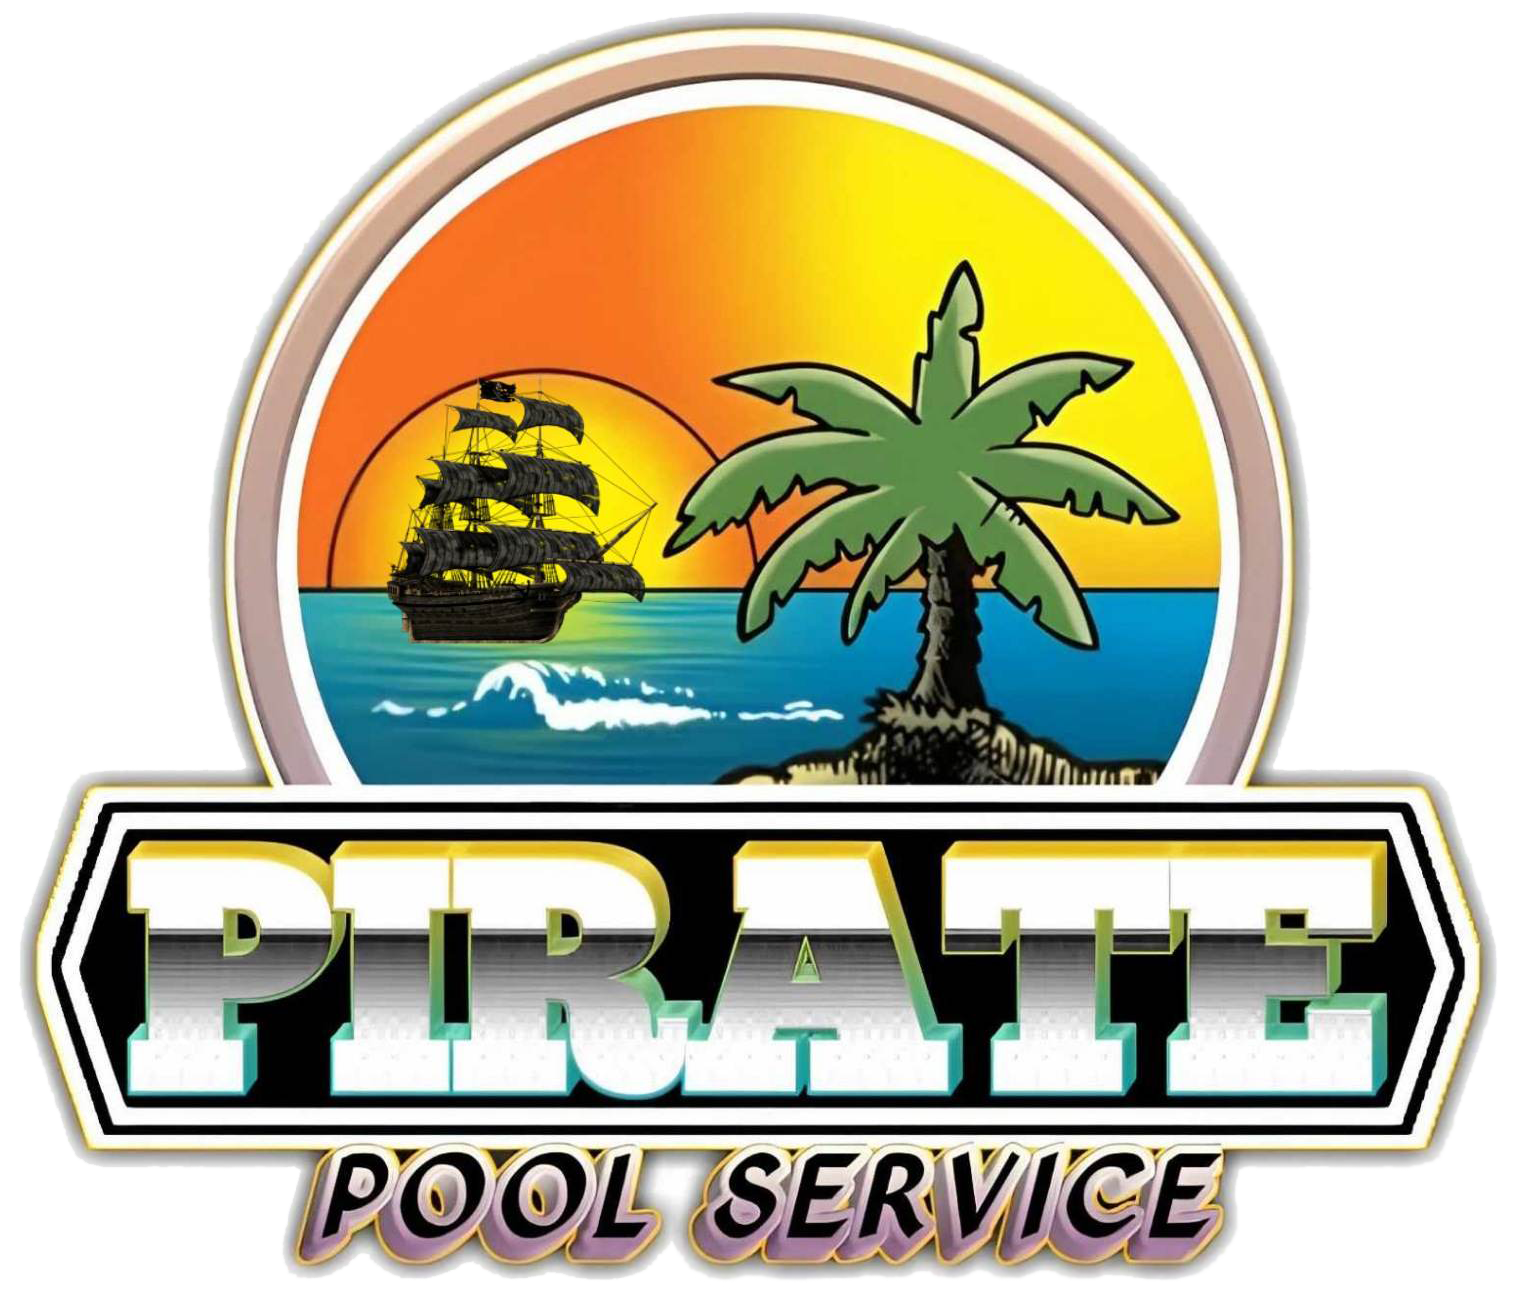 Pirate Pool Service